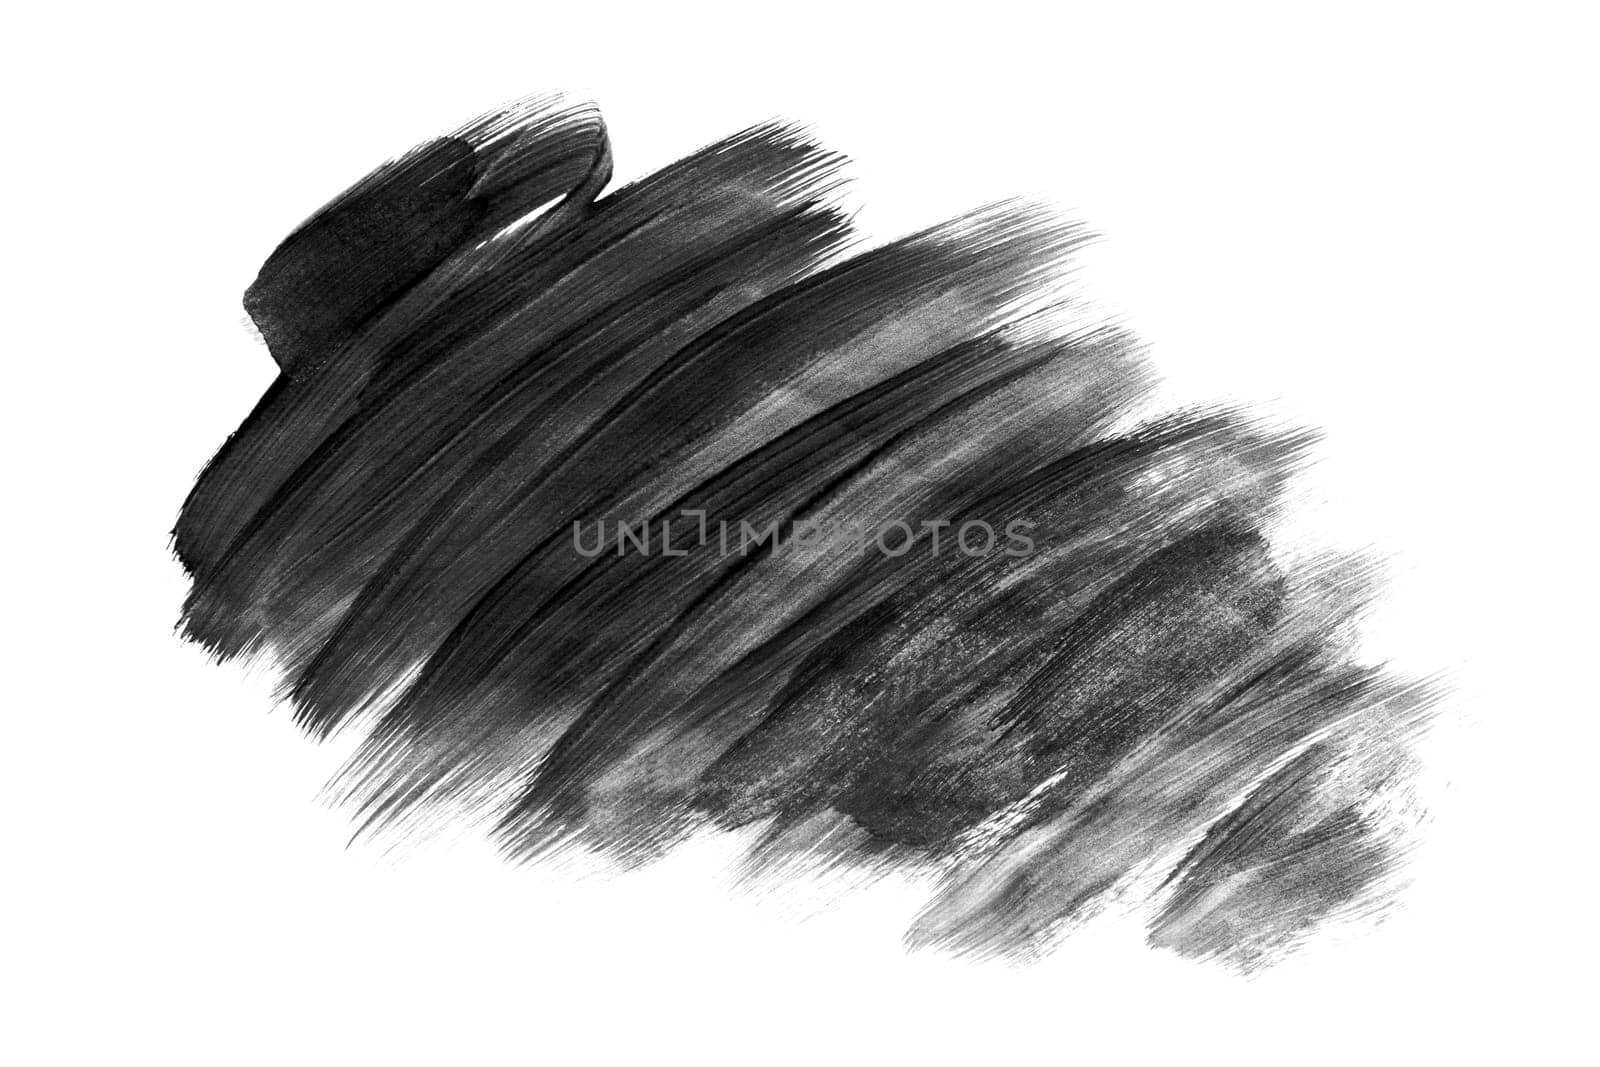 Black brush stroke isolated on a white background. Stock design element